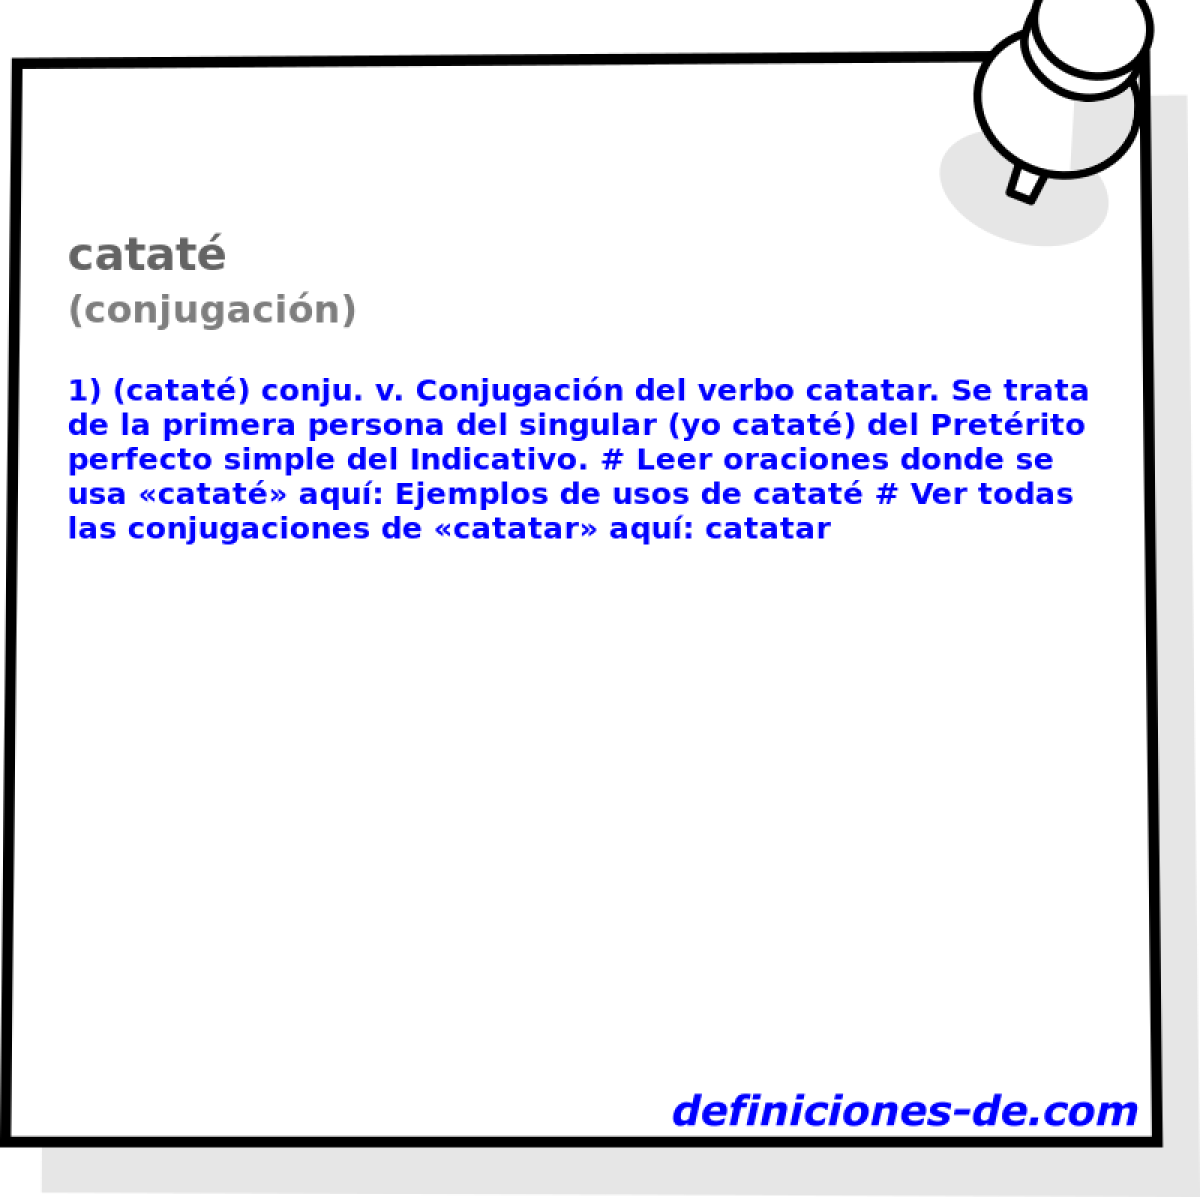 catat (conjugacin)